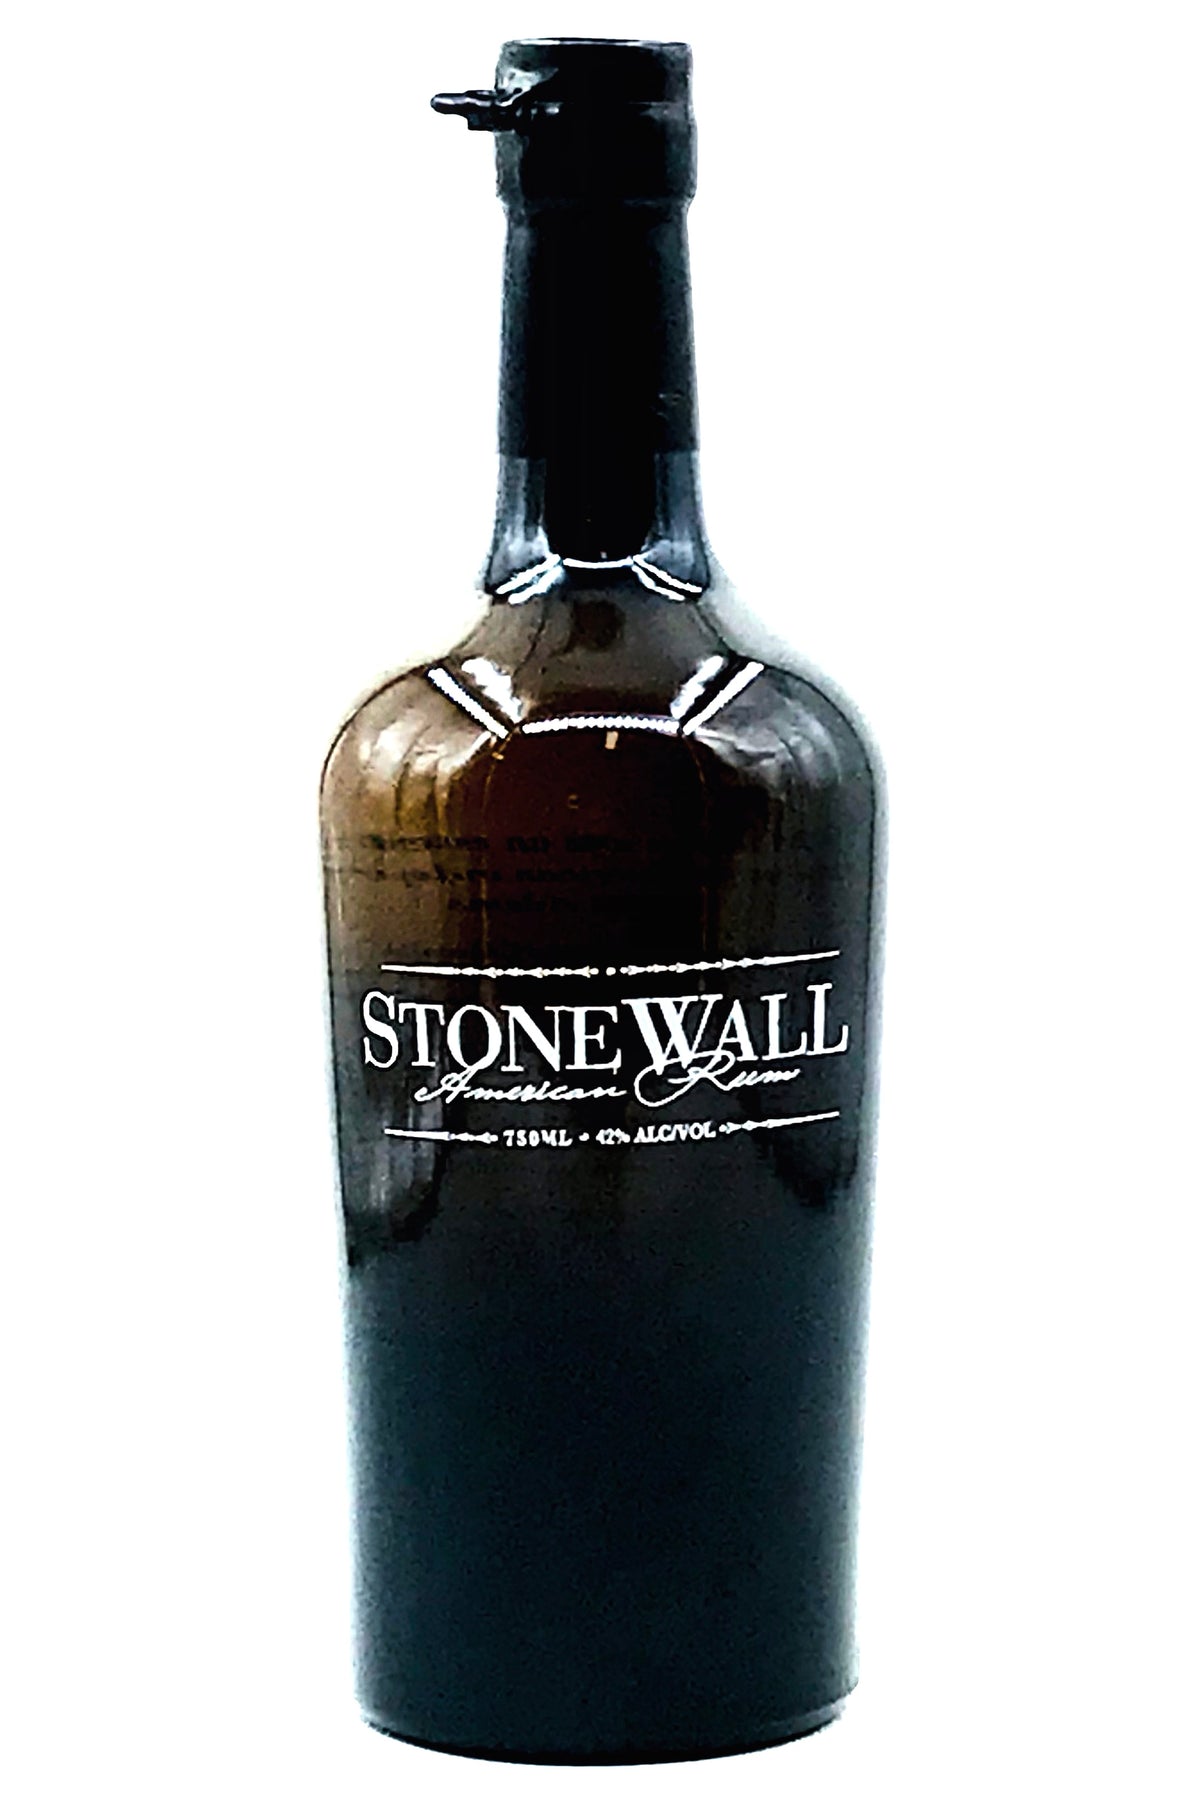 Stonewall American Rum